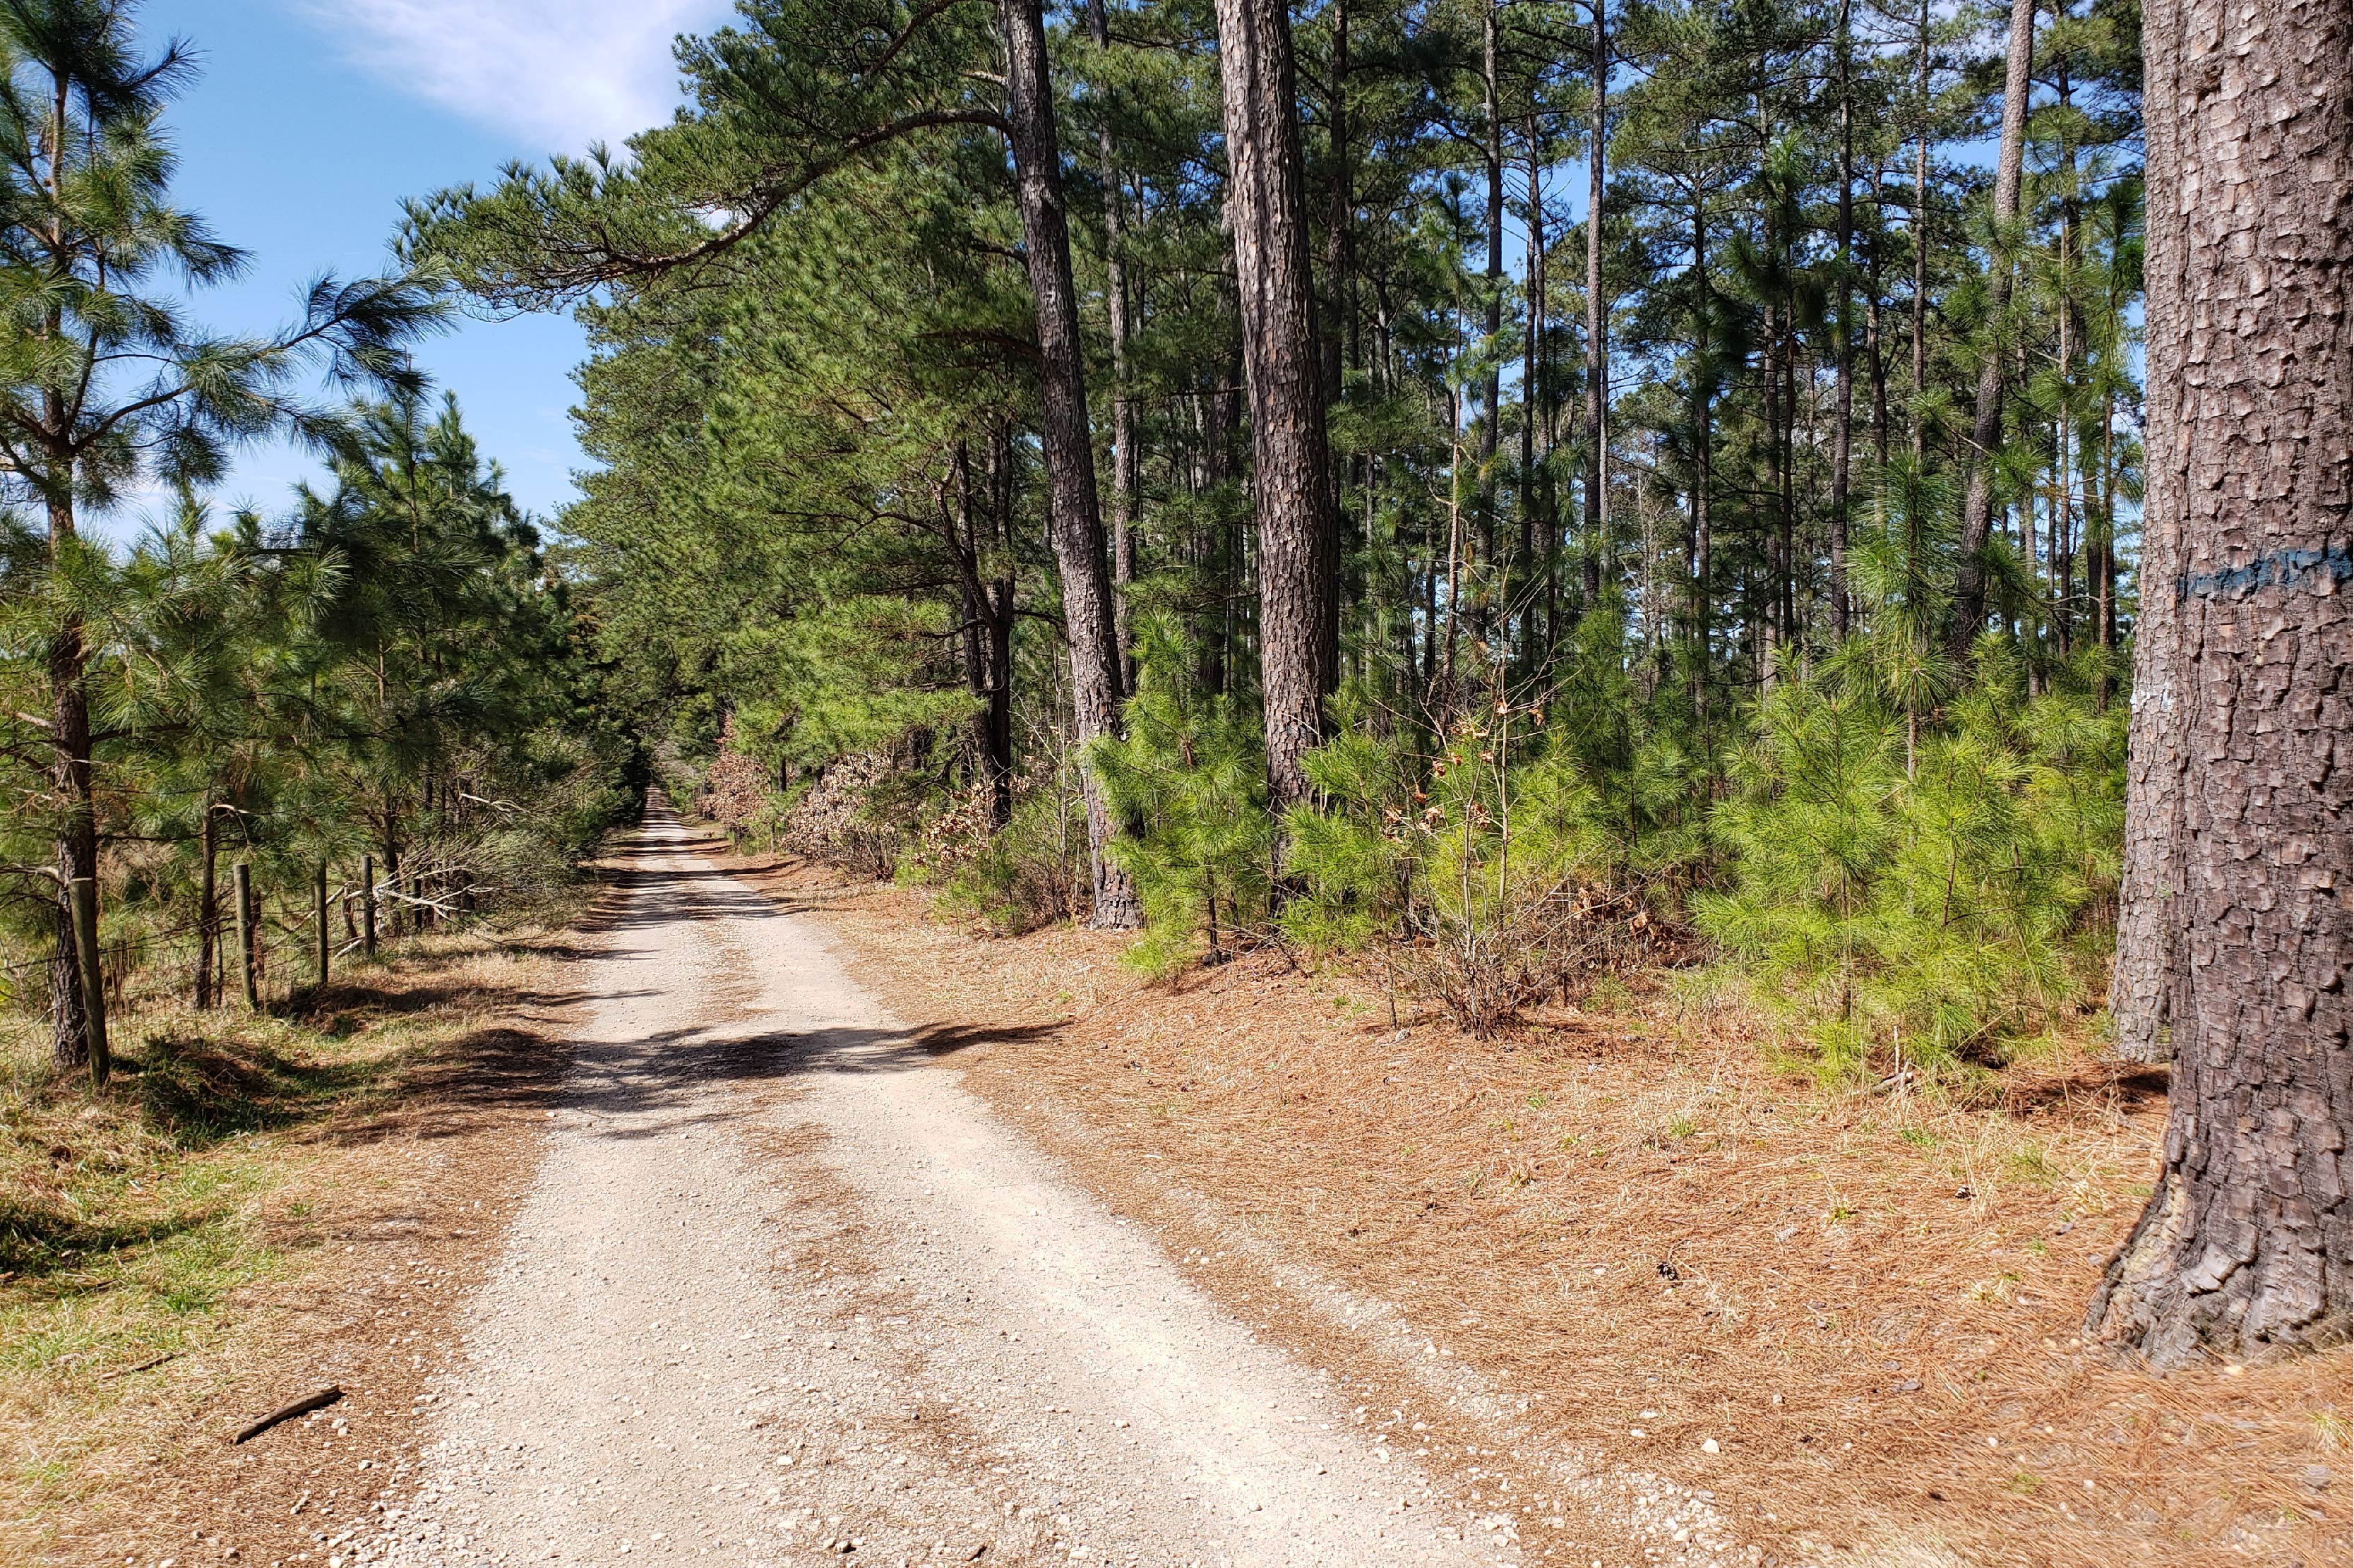 Trees lining a dirt road in North Carolina